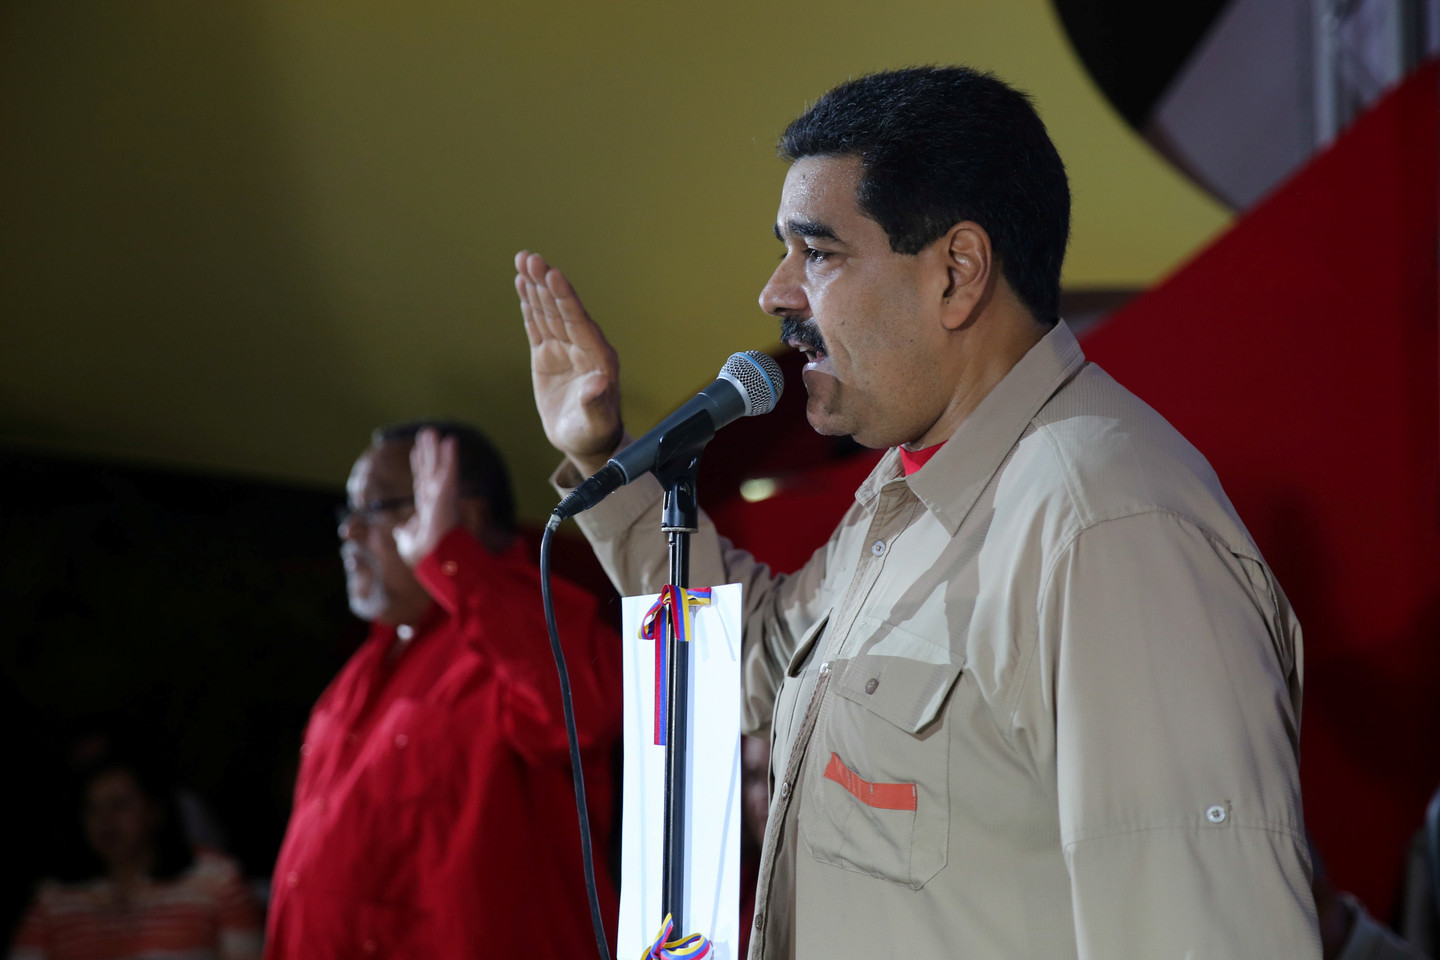 Мадуро назвал Мексику «несостоявшимся государством»